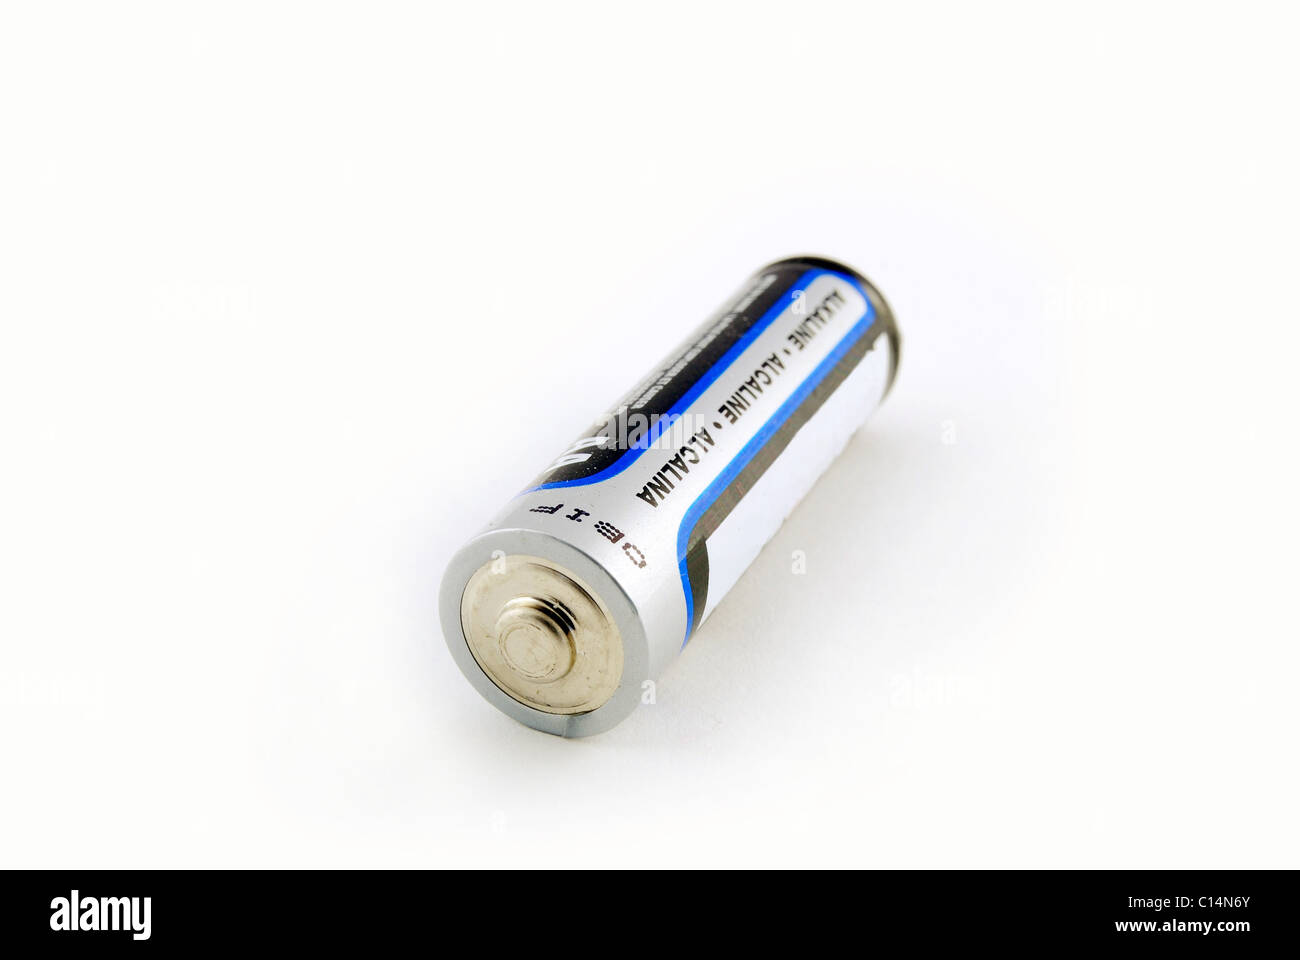 Single cell aa battery Stock Photo - Alamy